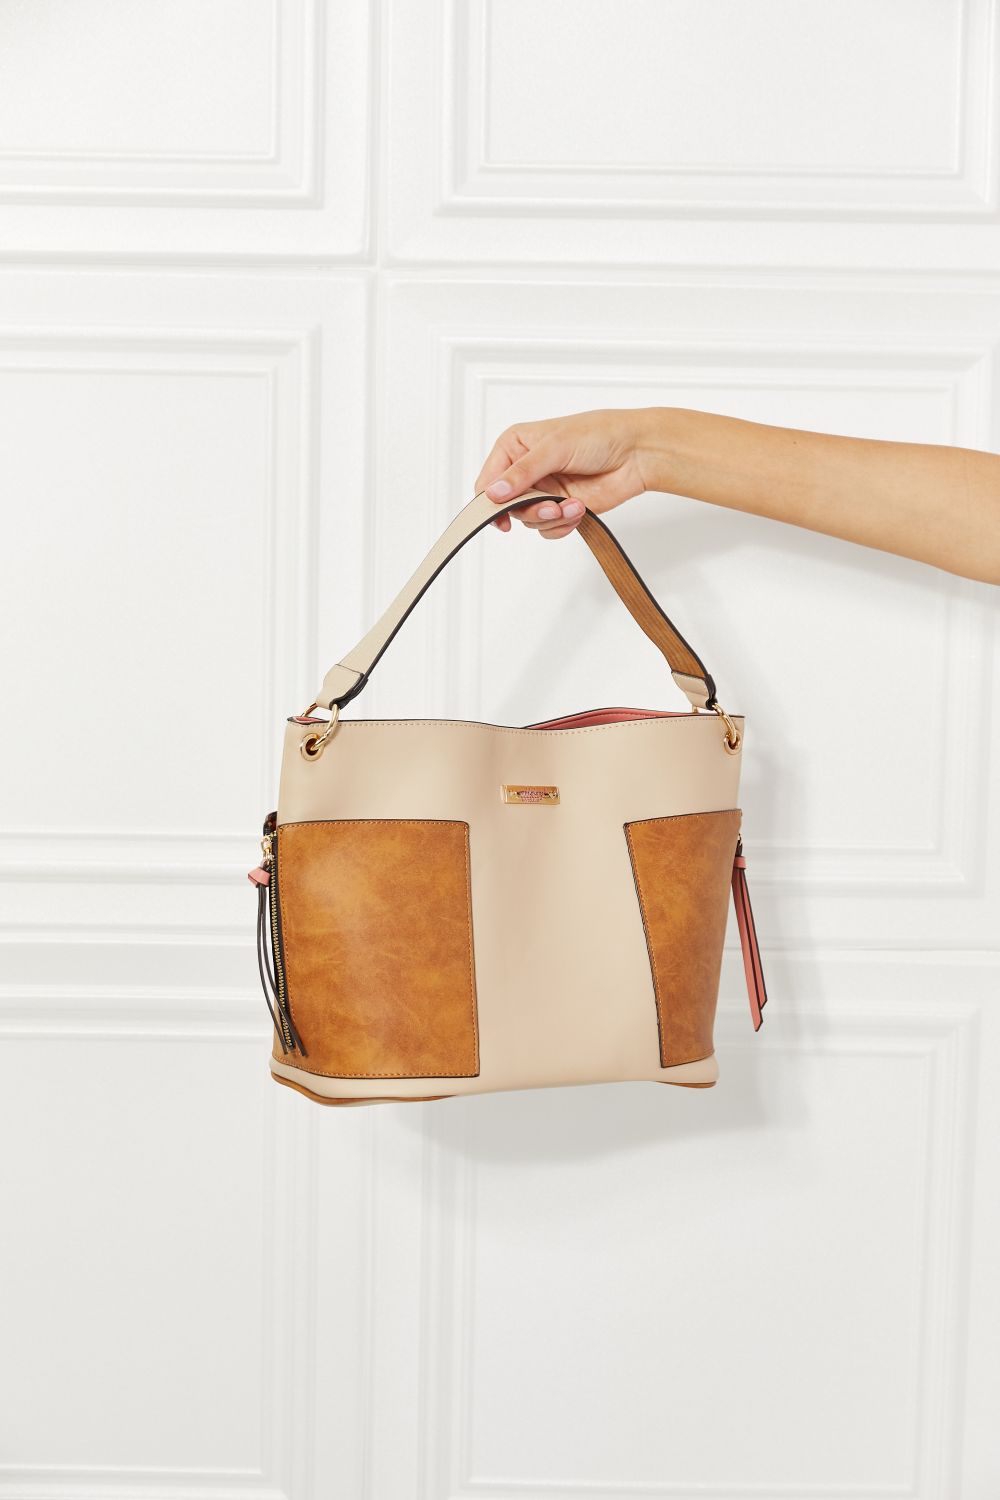 The Luxury Sweetheart Handbag w/ Free Gifts